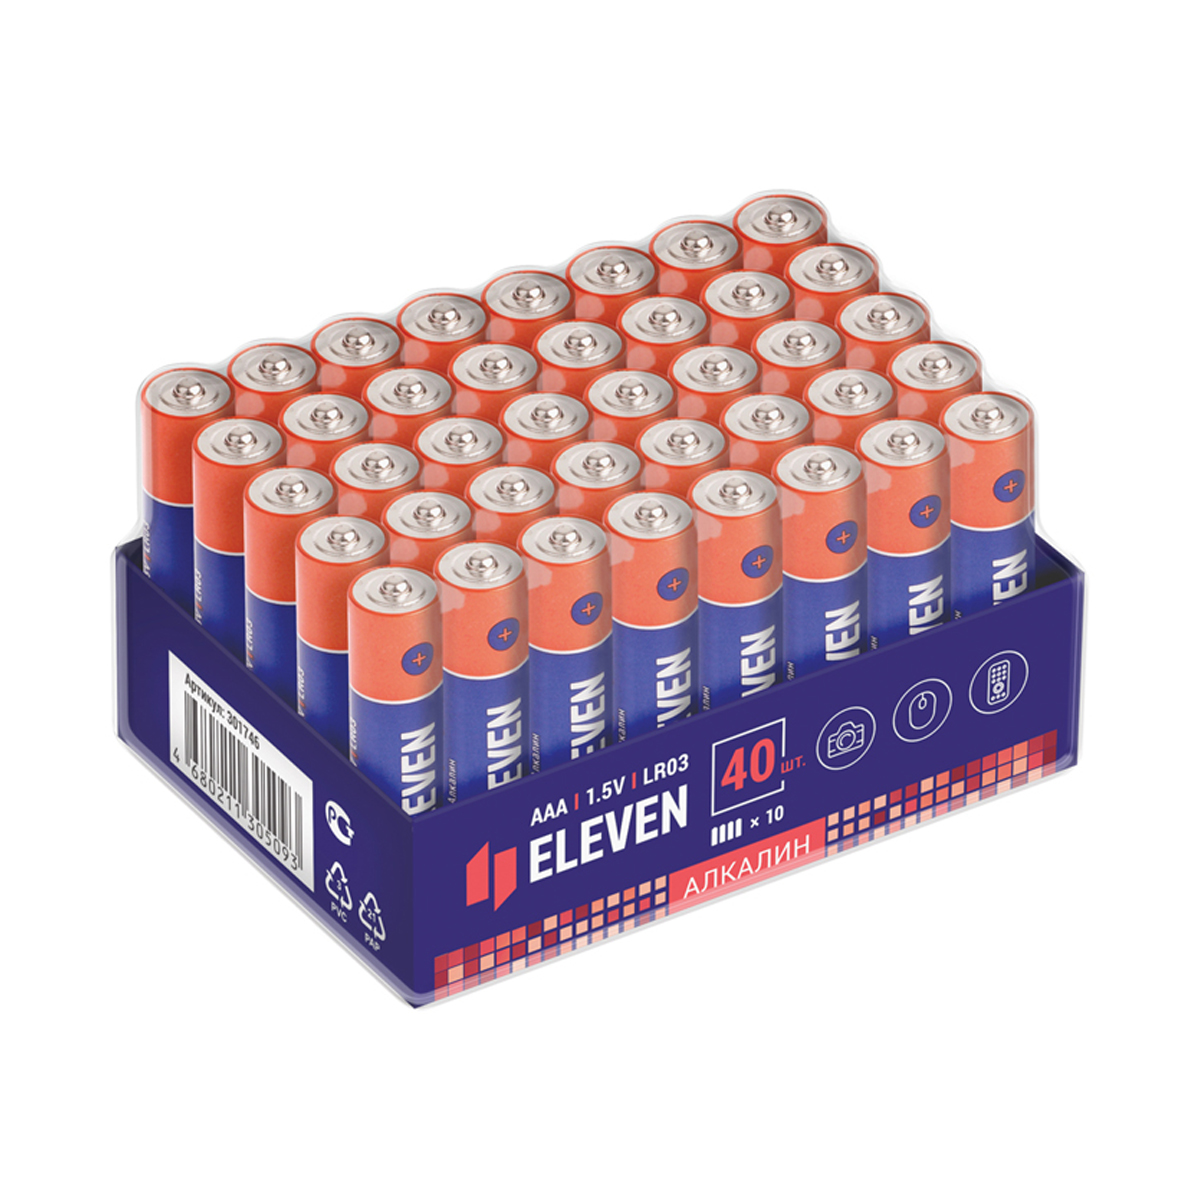 Батарейки Eleven 3А Мизинчиковые AAA (LR03), алкалиновые, 1,5В, 40 шт батарейки алкалиновые фаzа alkaline ааа lr03 мизинчиковые 40шт lr03a p40